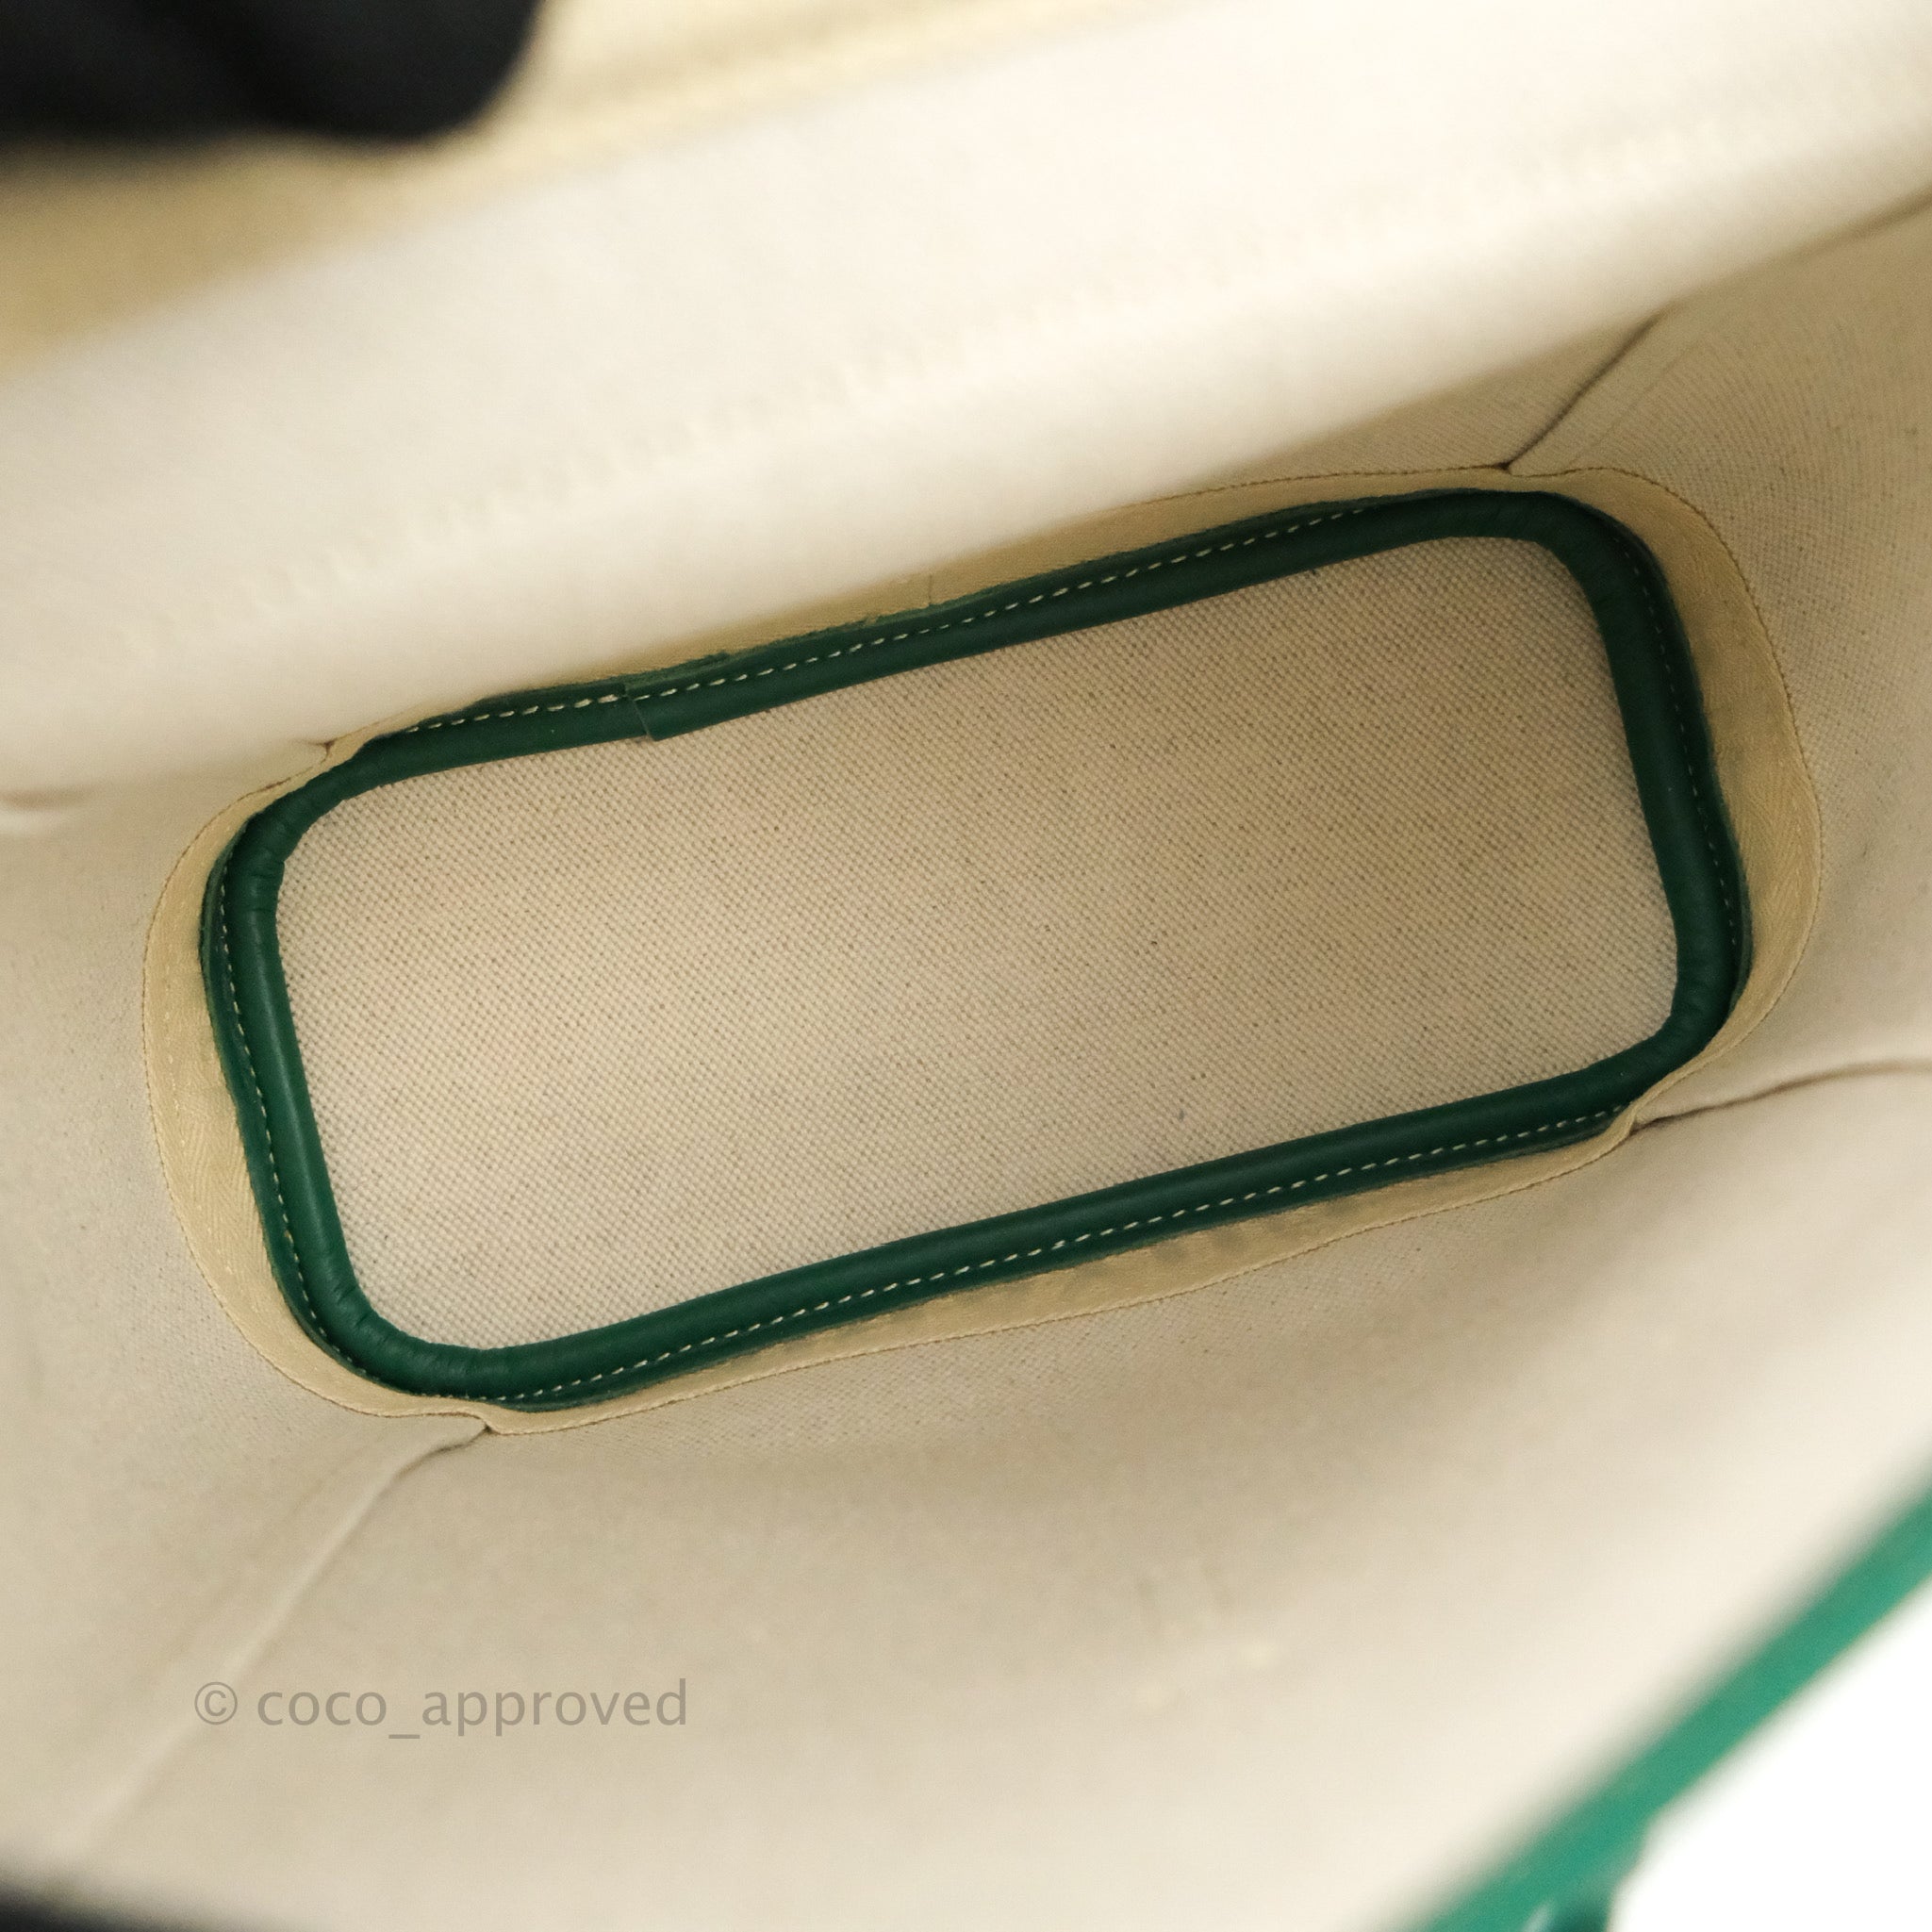 Goyard Goyardine Calfskin Mini Alpin Backpack White - NOBLEMARS